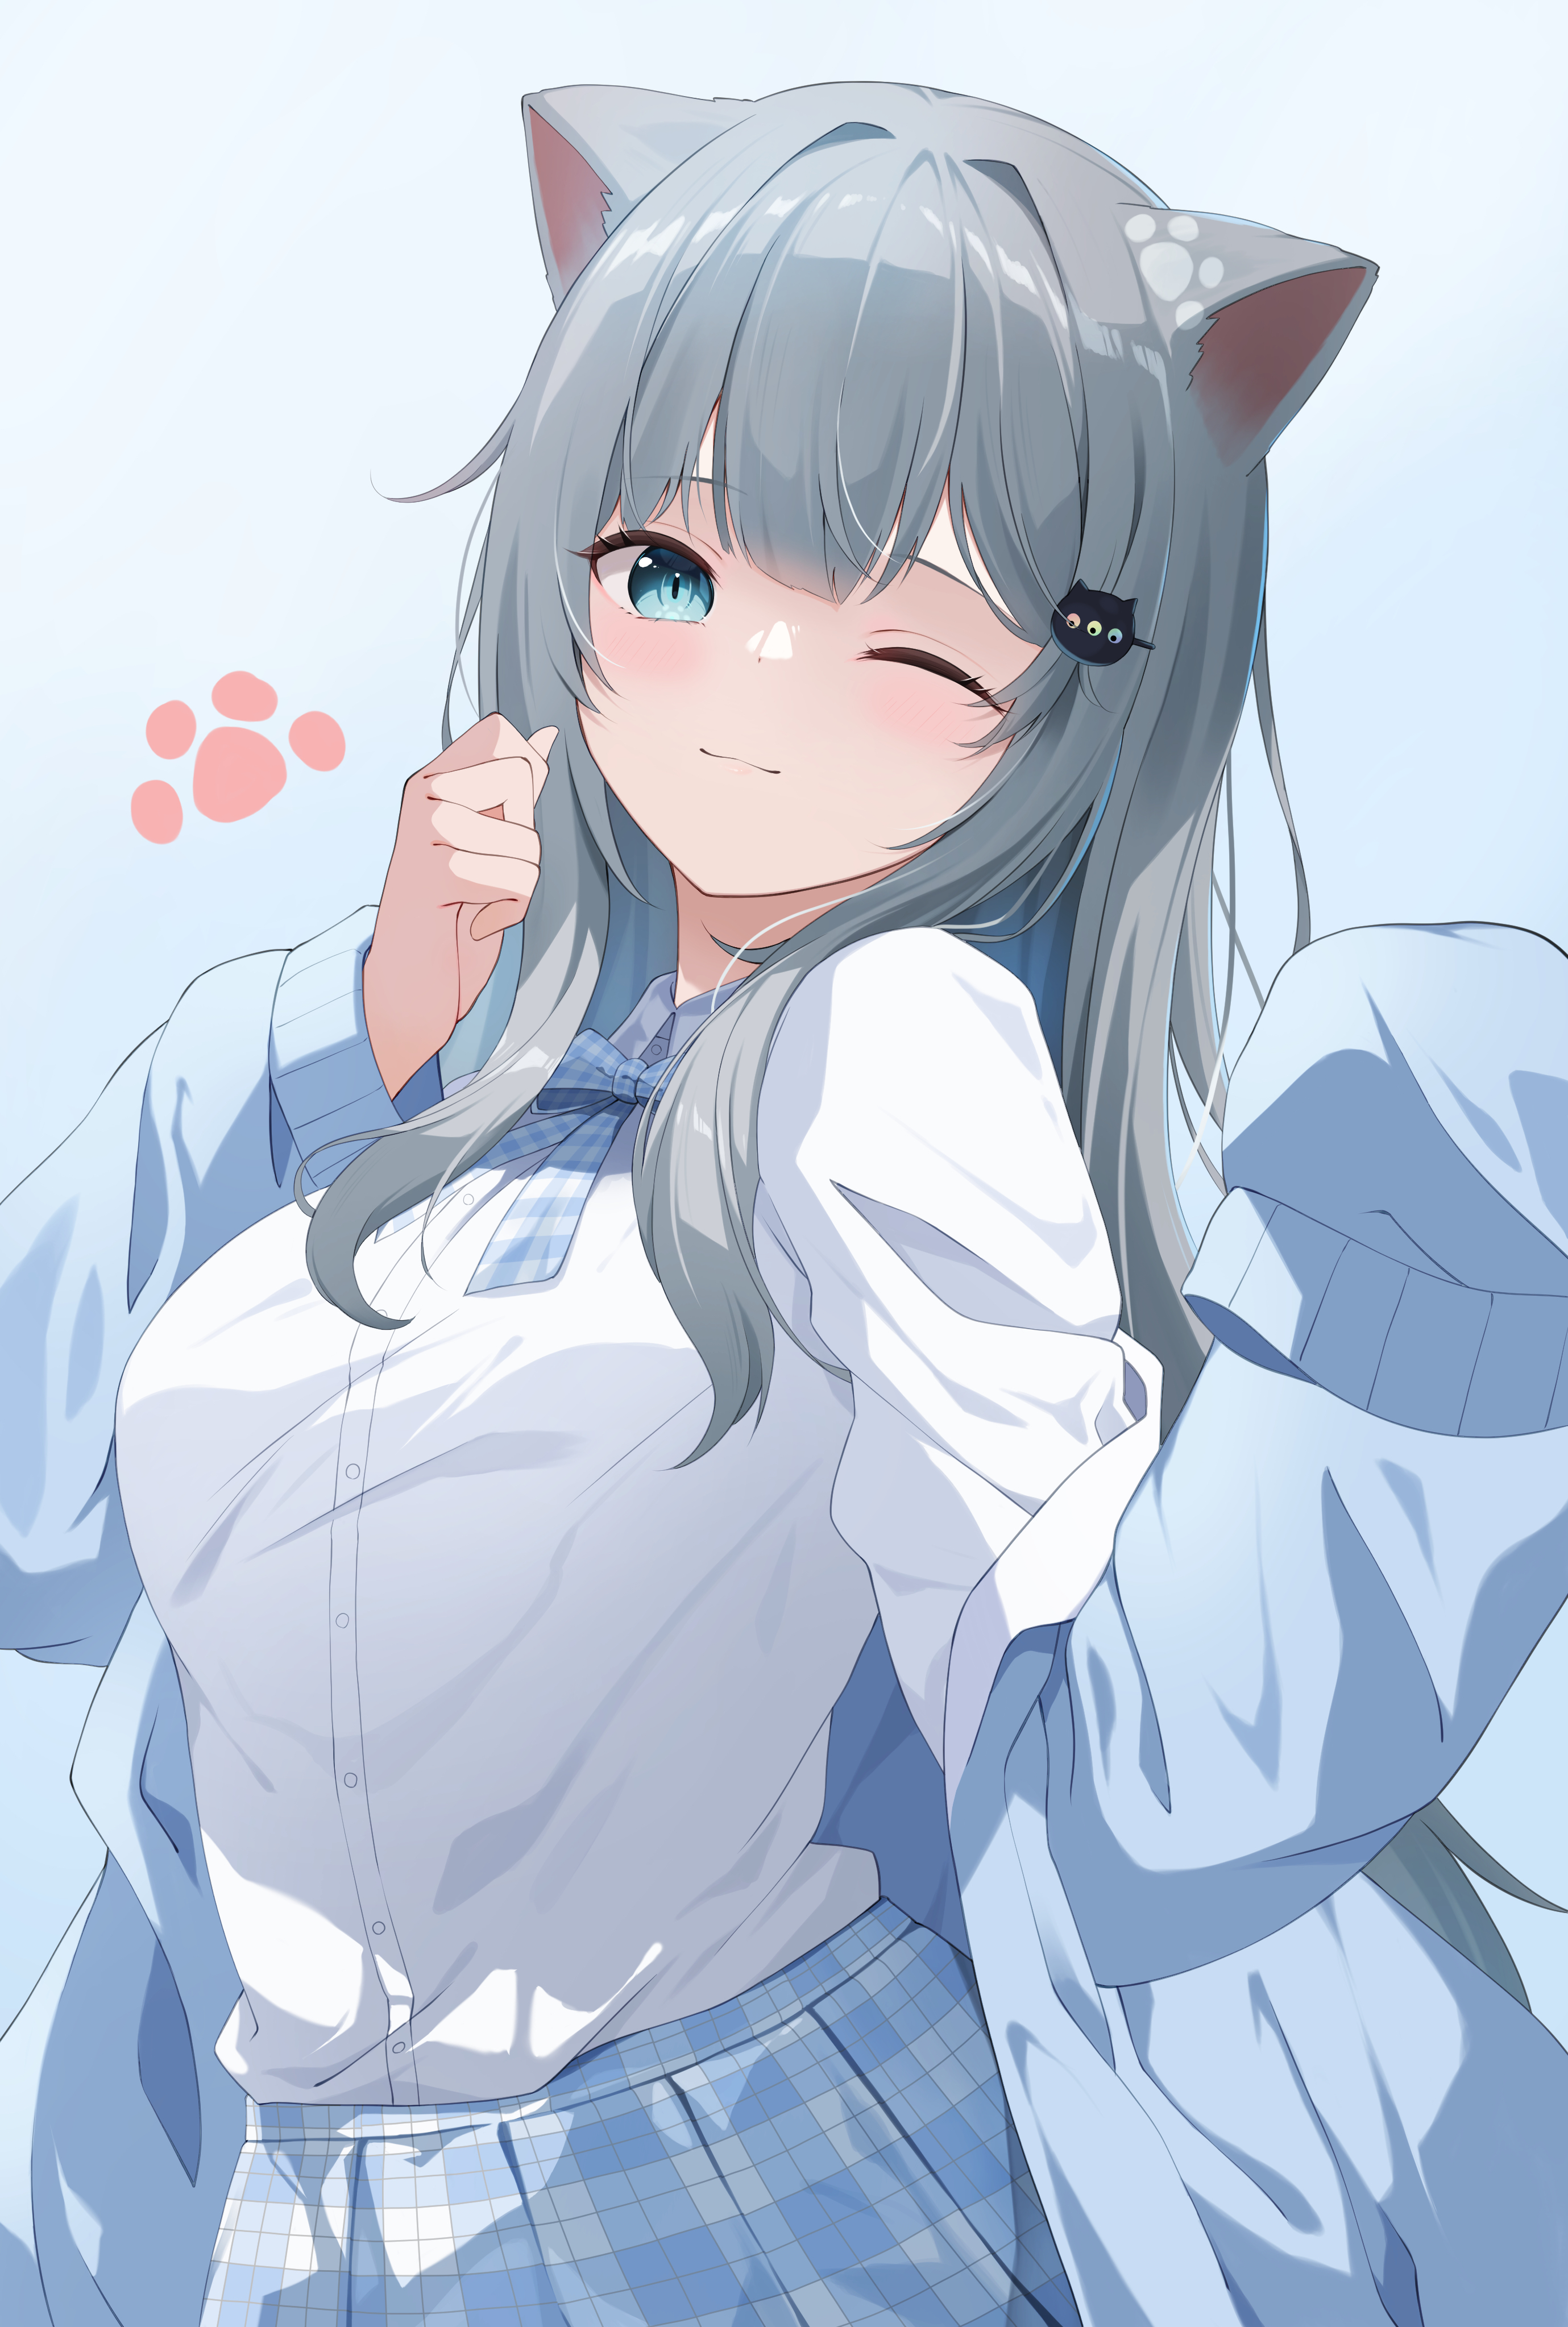 Anime 2758x4093 nacho neko anime anime girls cat girl blue eyes gray hair oversized outfit school uniform blue ribbons wink